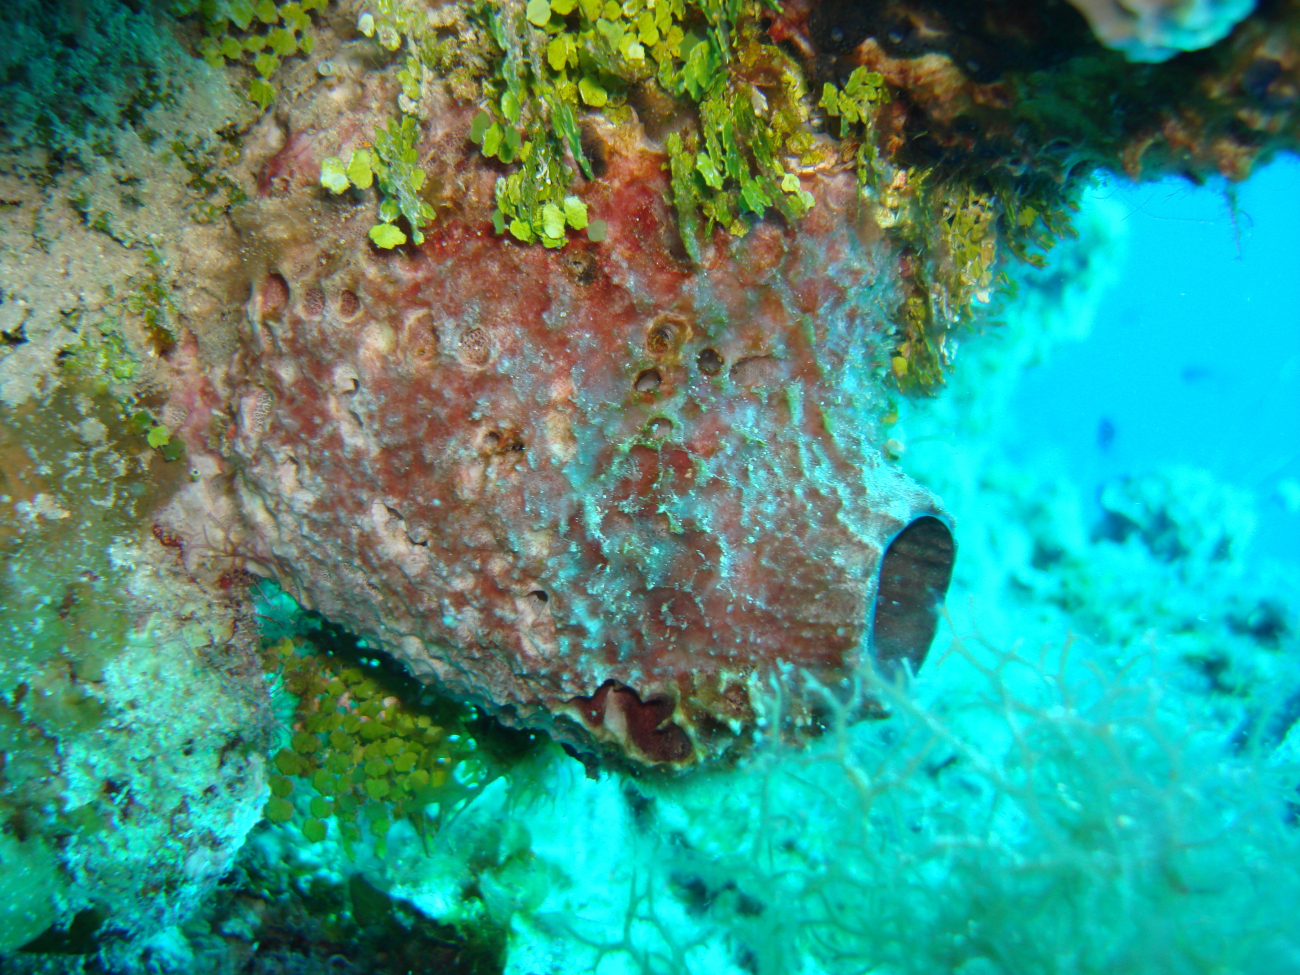 Pink shallow sponge (Ircinia sp